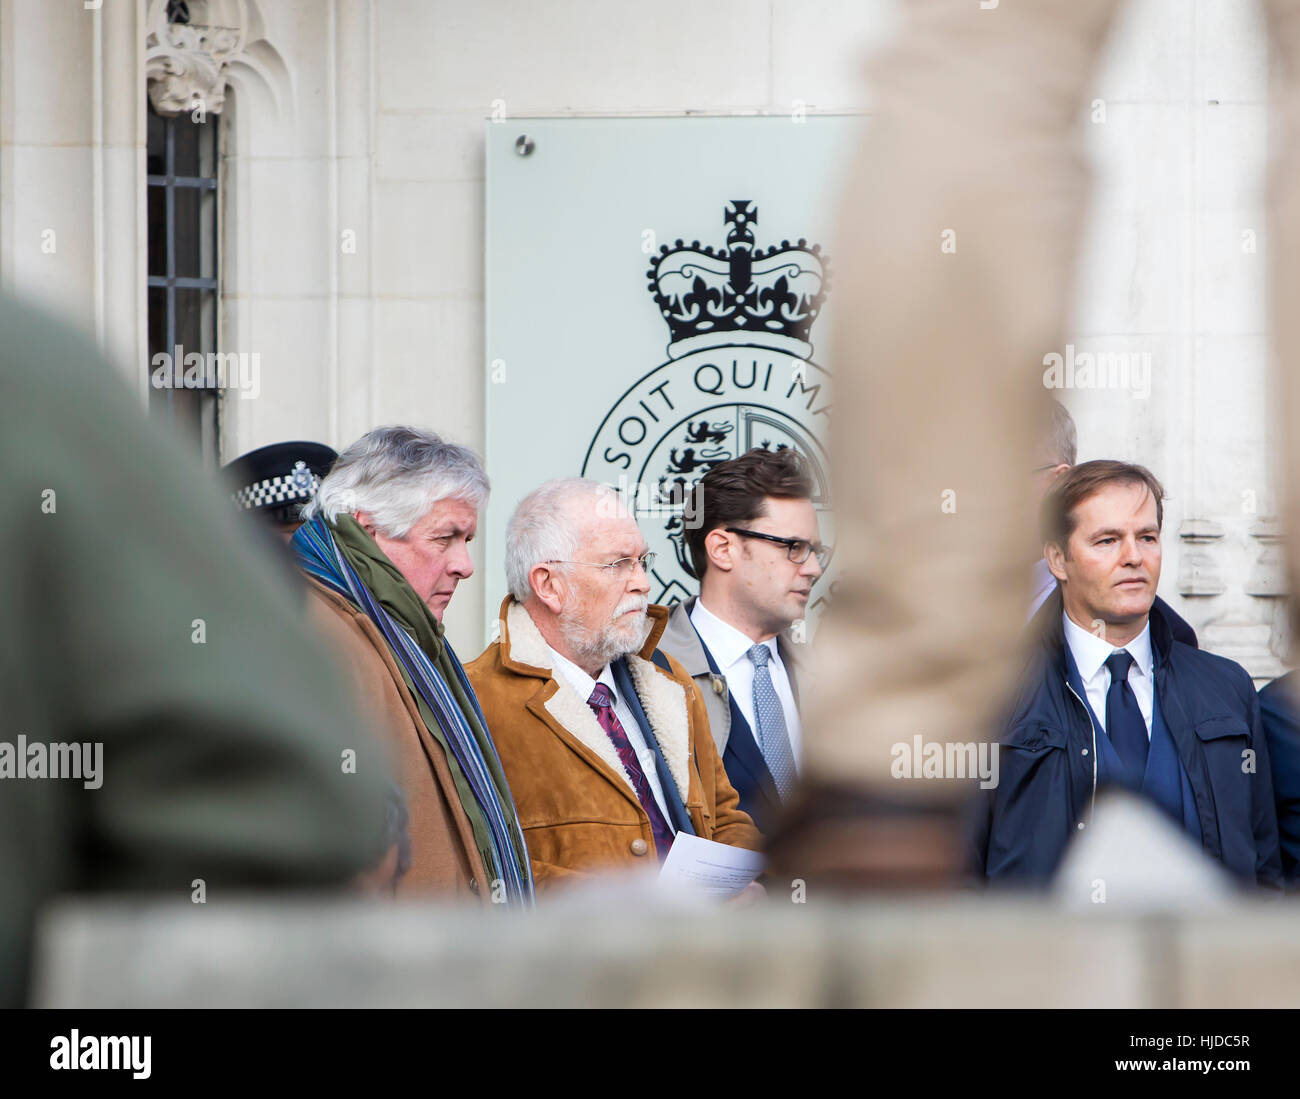 London, UK. 24th Jan, 2017. Verdict of the Supreme Court. The verdict of the Supreme Court was given today. Credit: Jane Campbell/Alamy Live News Stock Photo